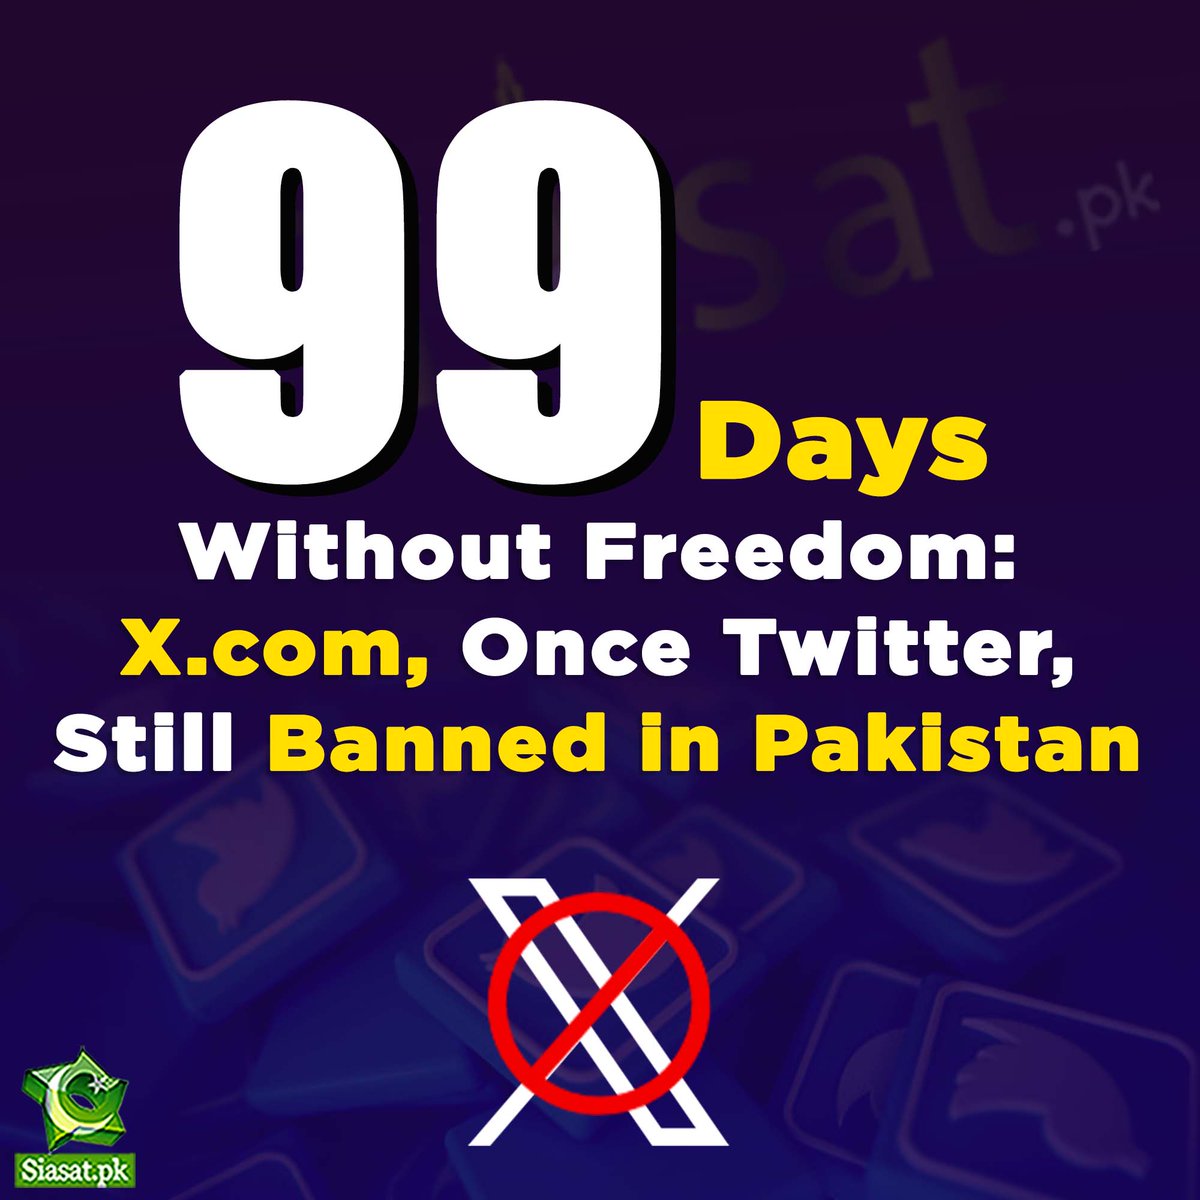 Day 99: The popular social media app @x remains blocked in Pakistan. #InternetFreedom #Censorship @elonmusk @GovtofPakistan @MoIB_Official, @PTAofficialpk #PakistanUnderFascism @amnesty
@UNHumanRights @amnestysasia @RSF_inter @hrw @ThinkDemocracy @democracynow @_FAFEN @IFES1987